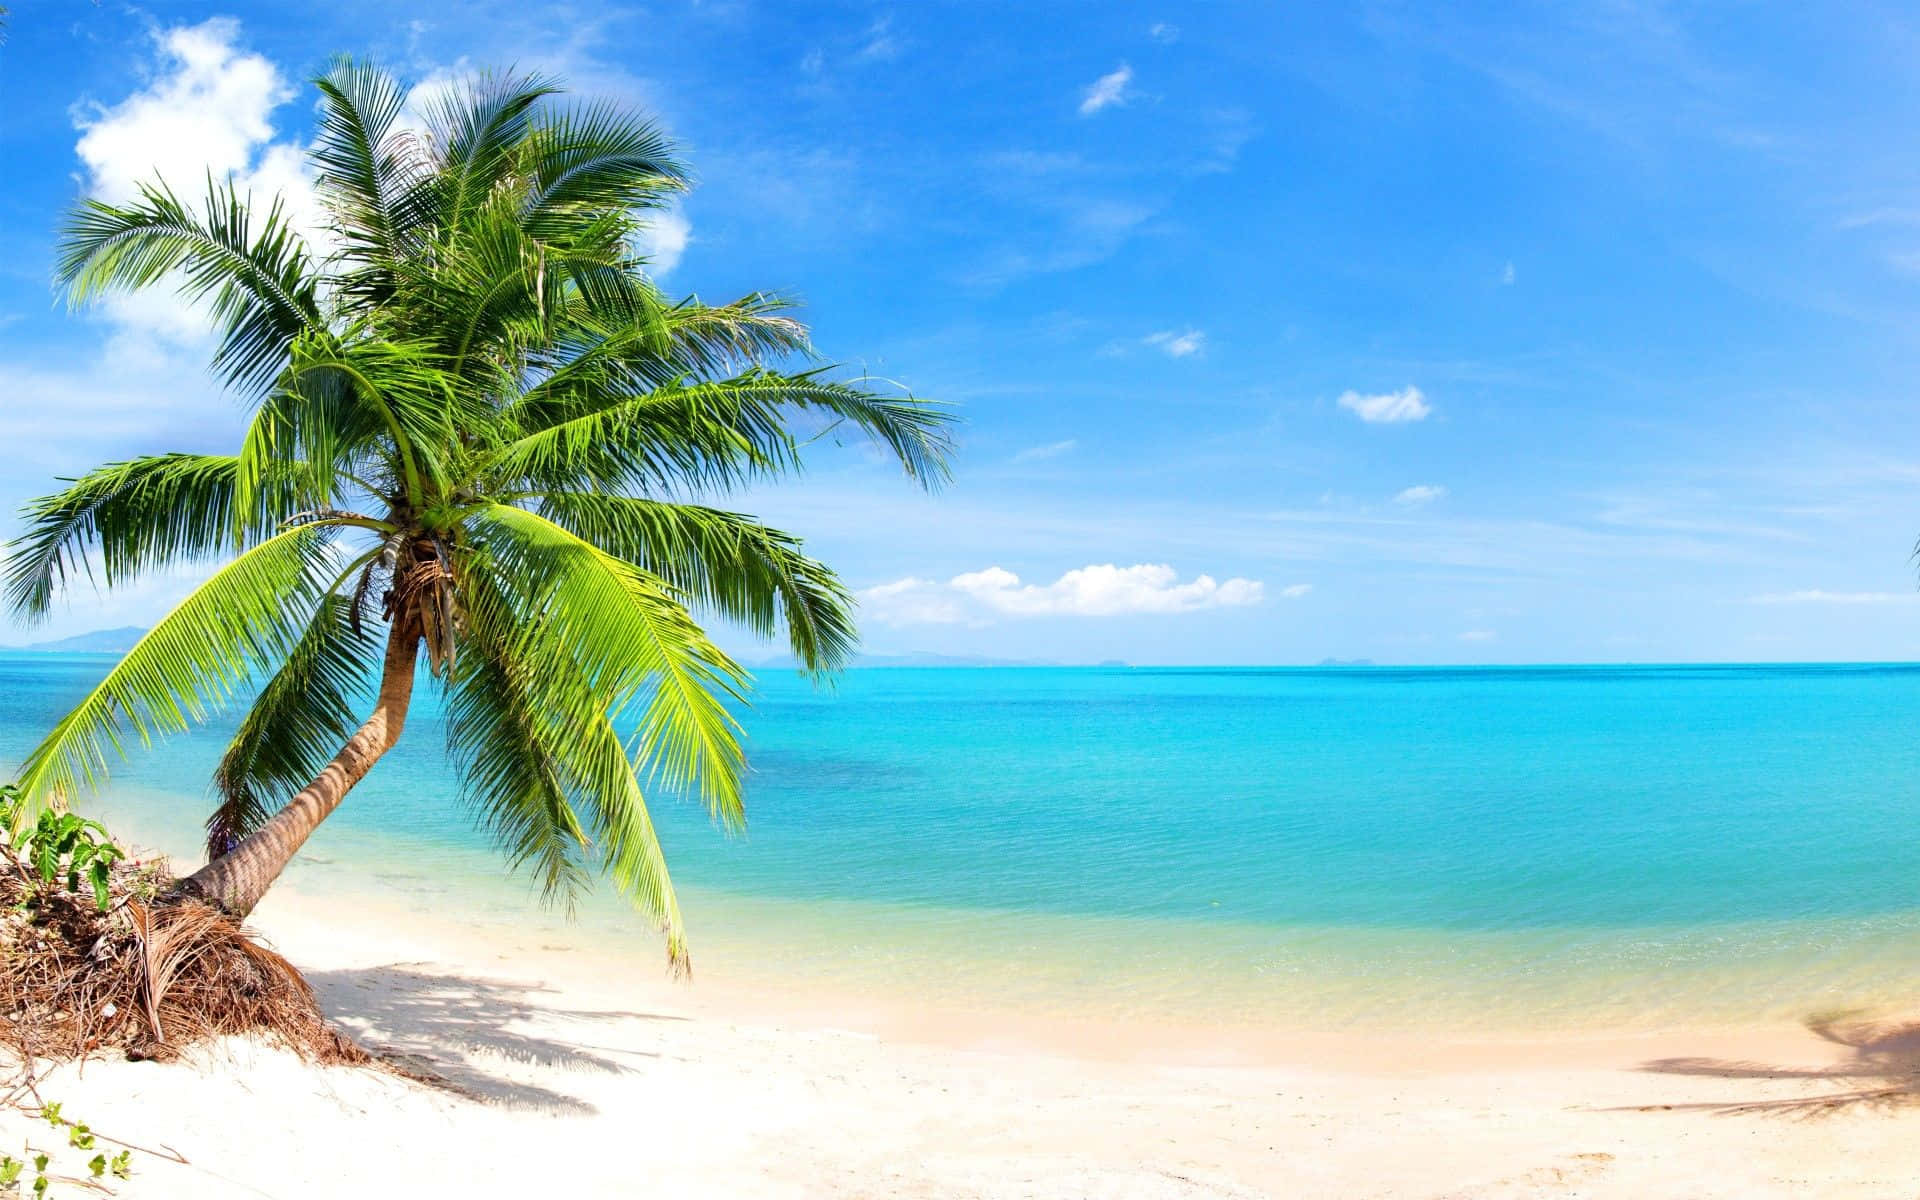 Enjoy the beautiful view of a palm-tree beach Wallpaper